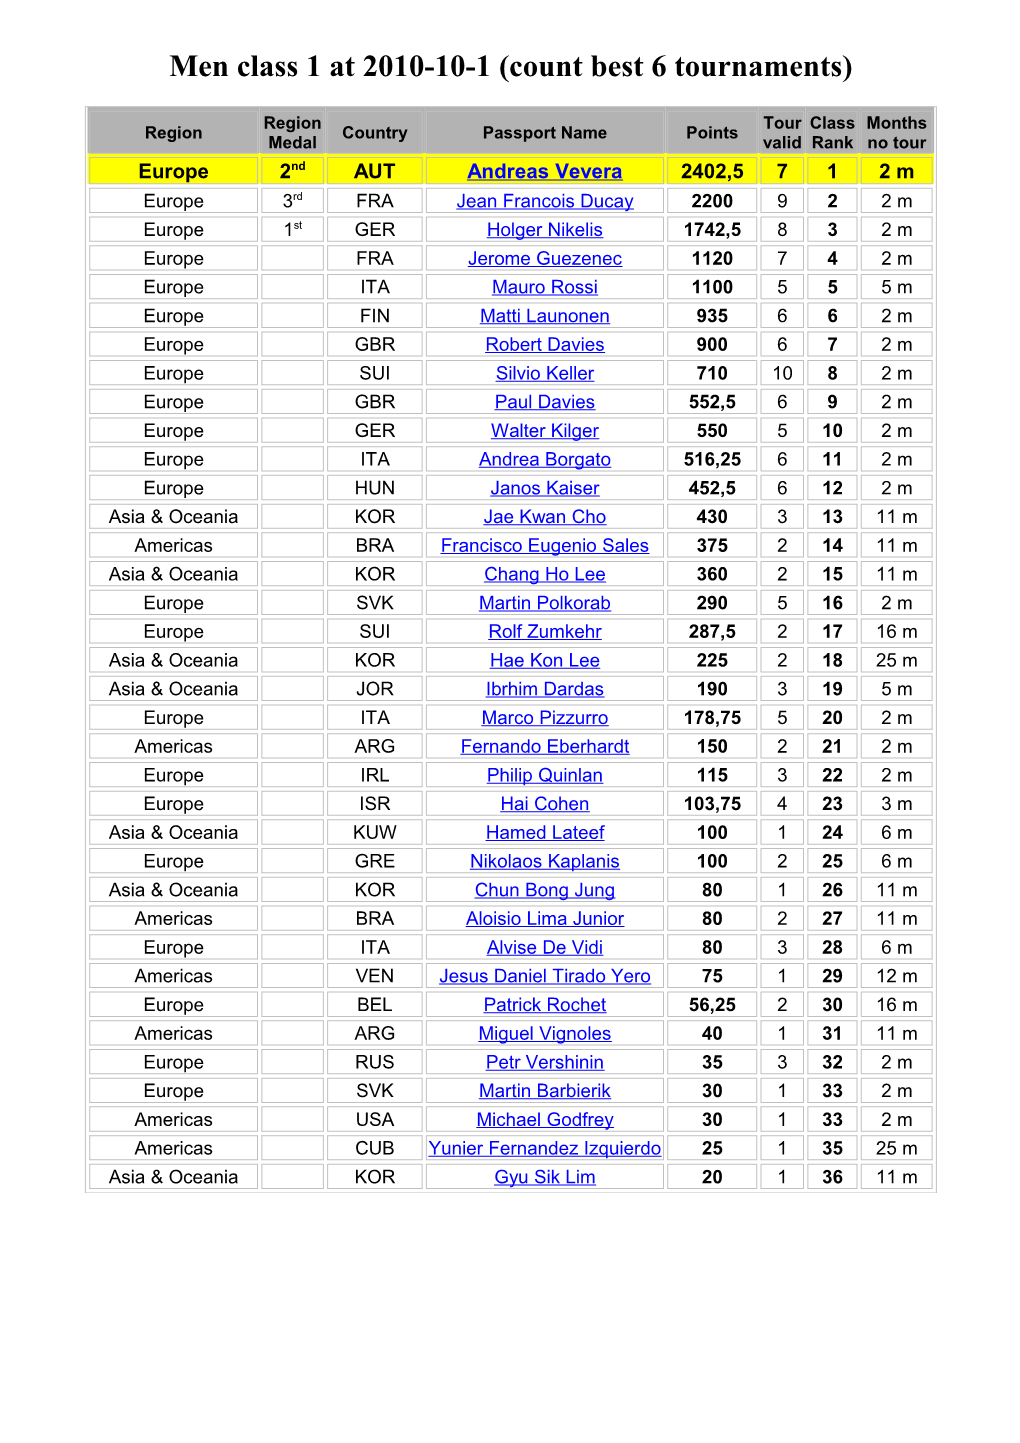 Men Class 1 at 2010-4-1 (Count Best 6 Tournaments)